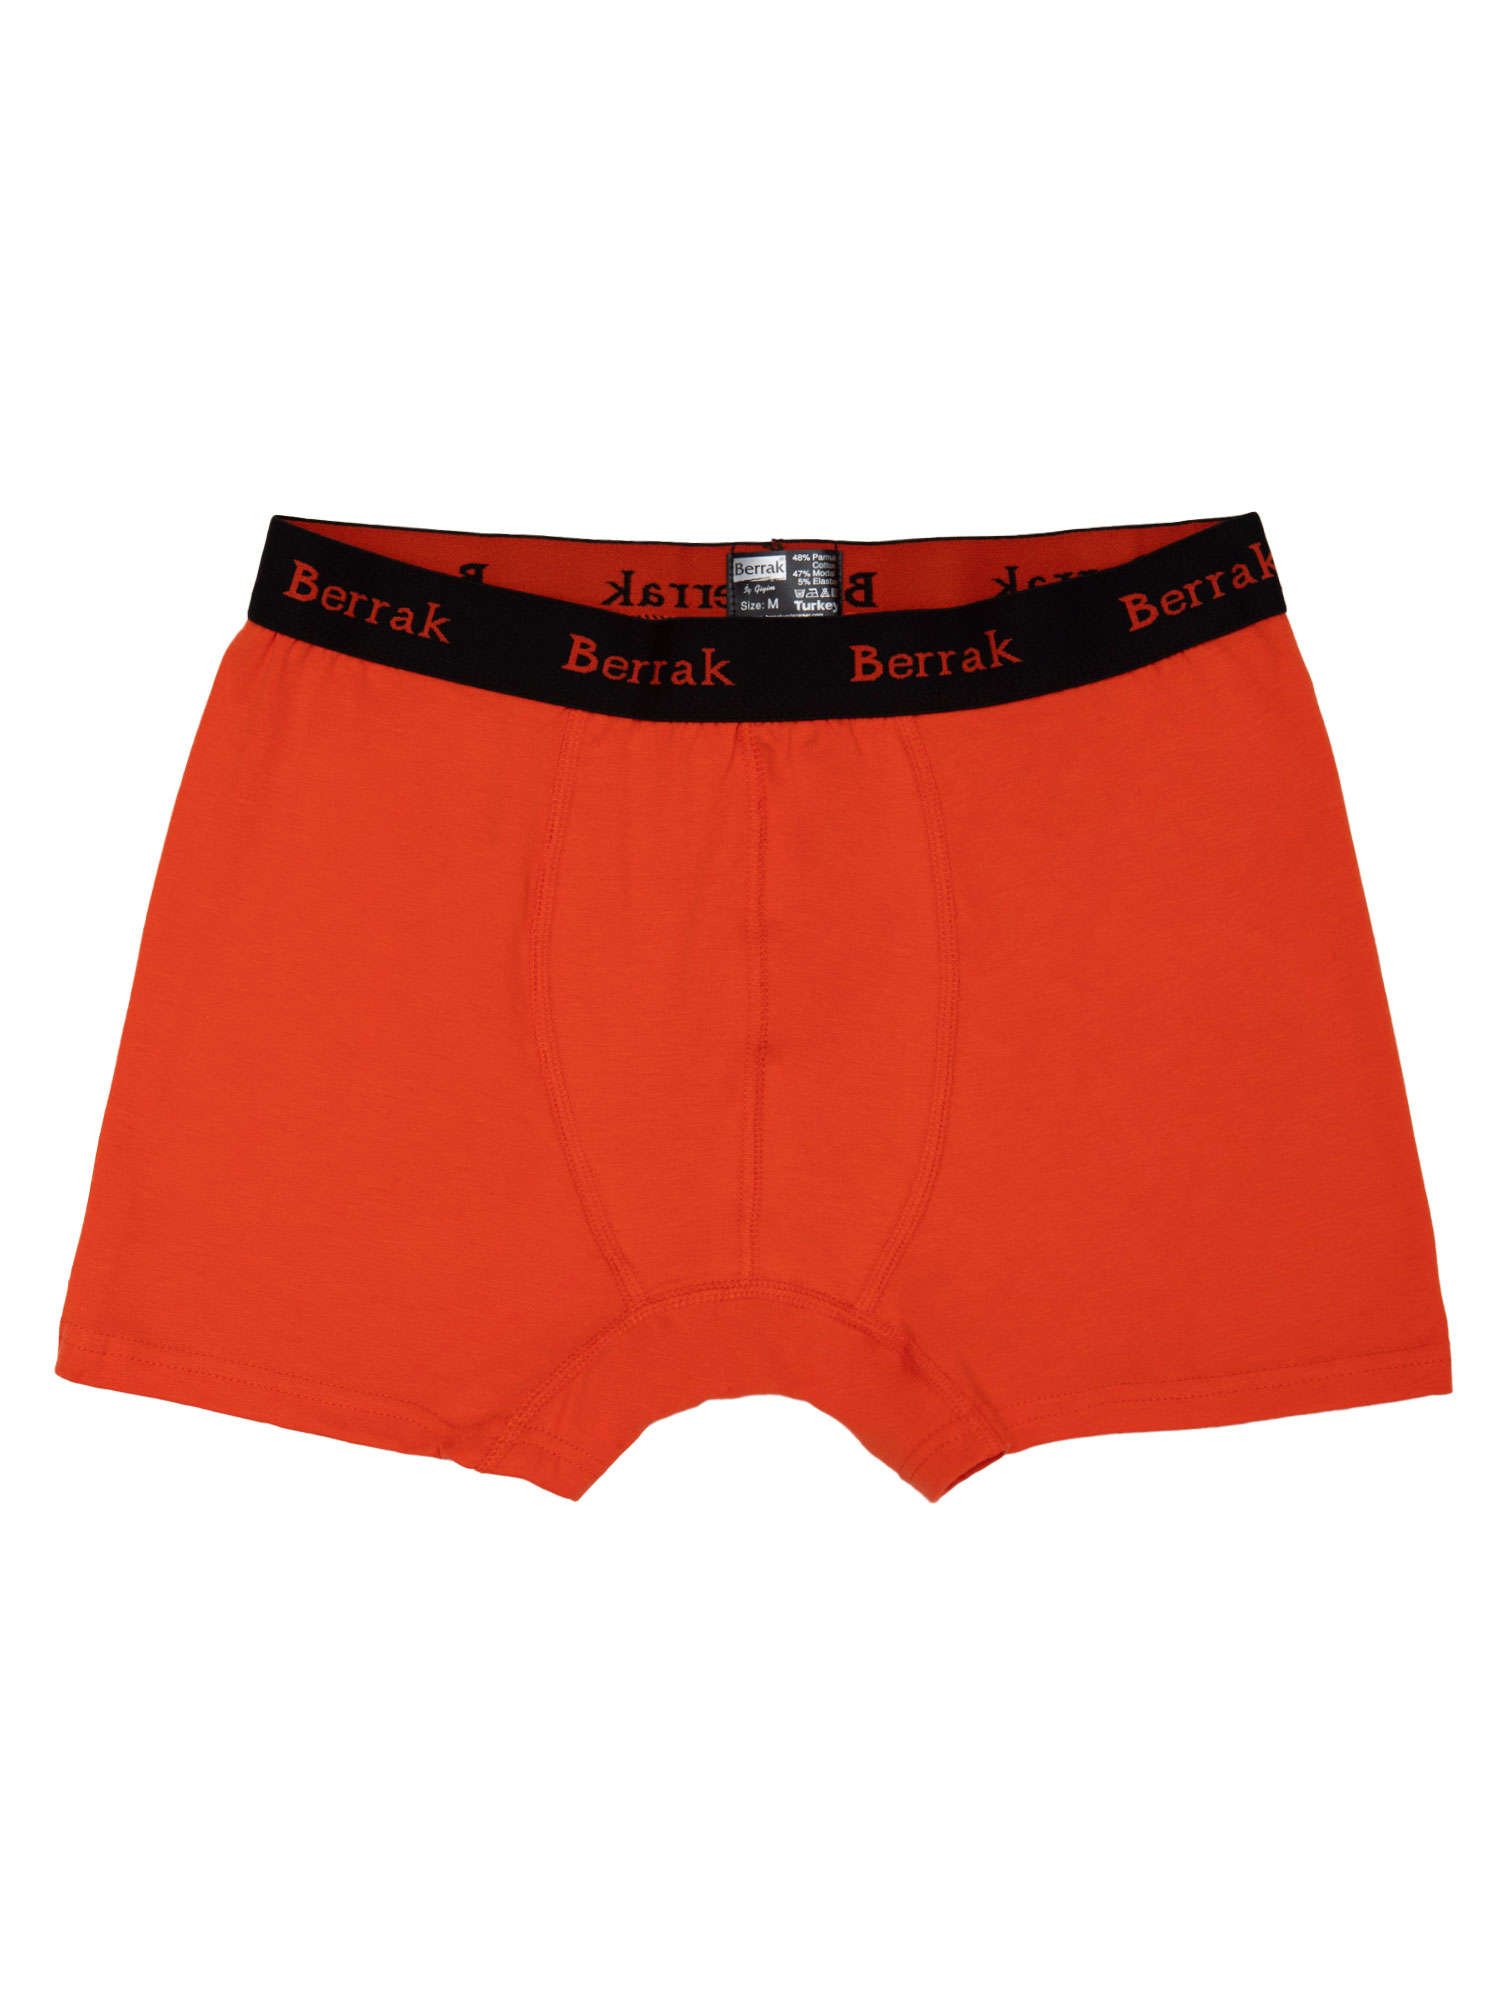 Orange Men's Boxer Shorts